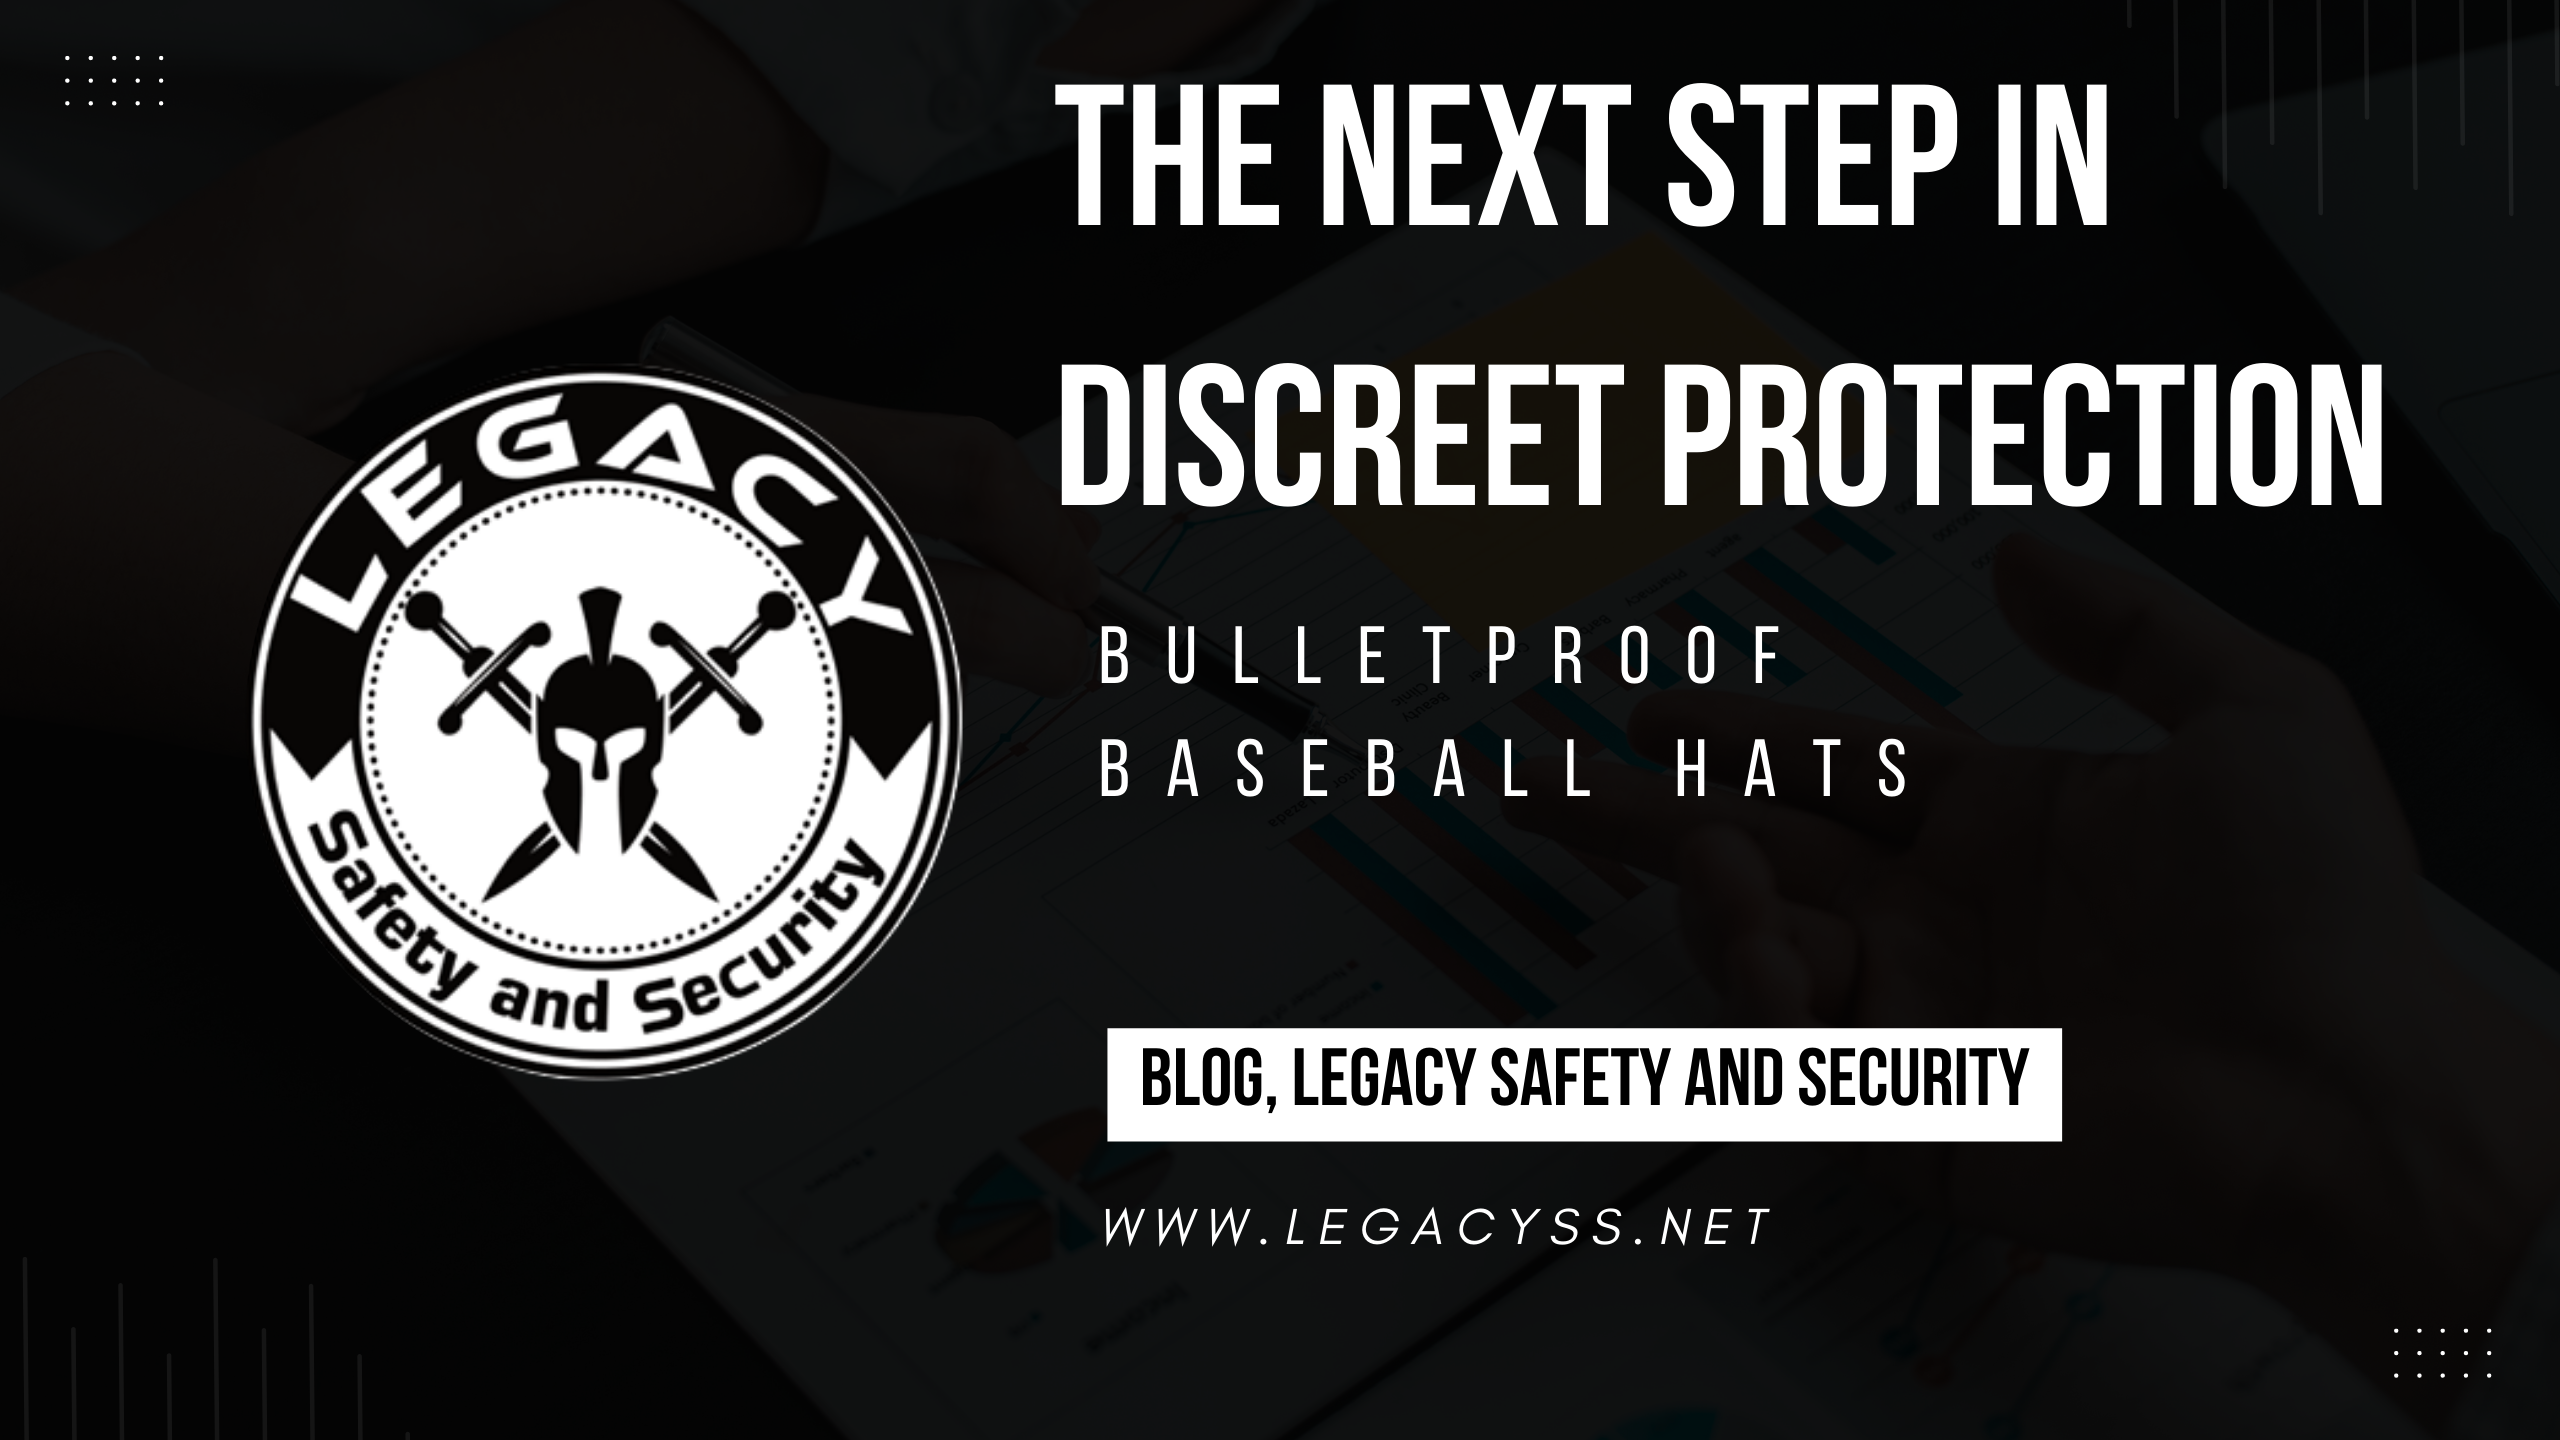 Discreet Bulltetproof Baseball Hats, Bulletproof Baseball Hats: The Next Step in Discreet Protection